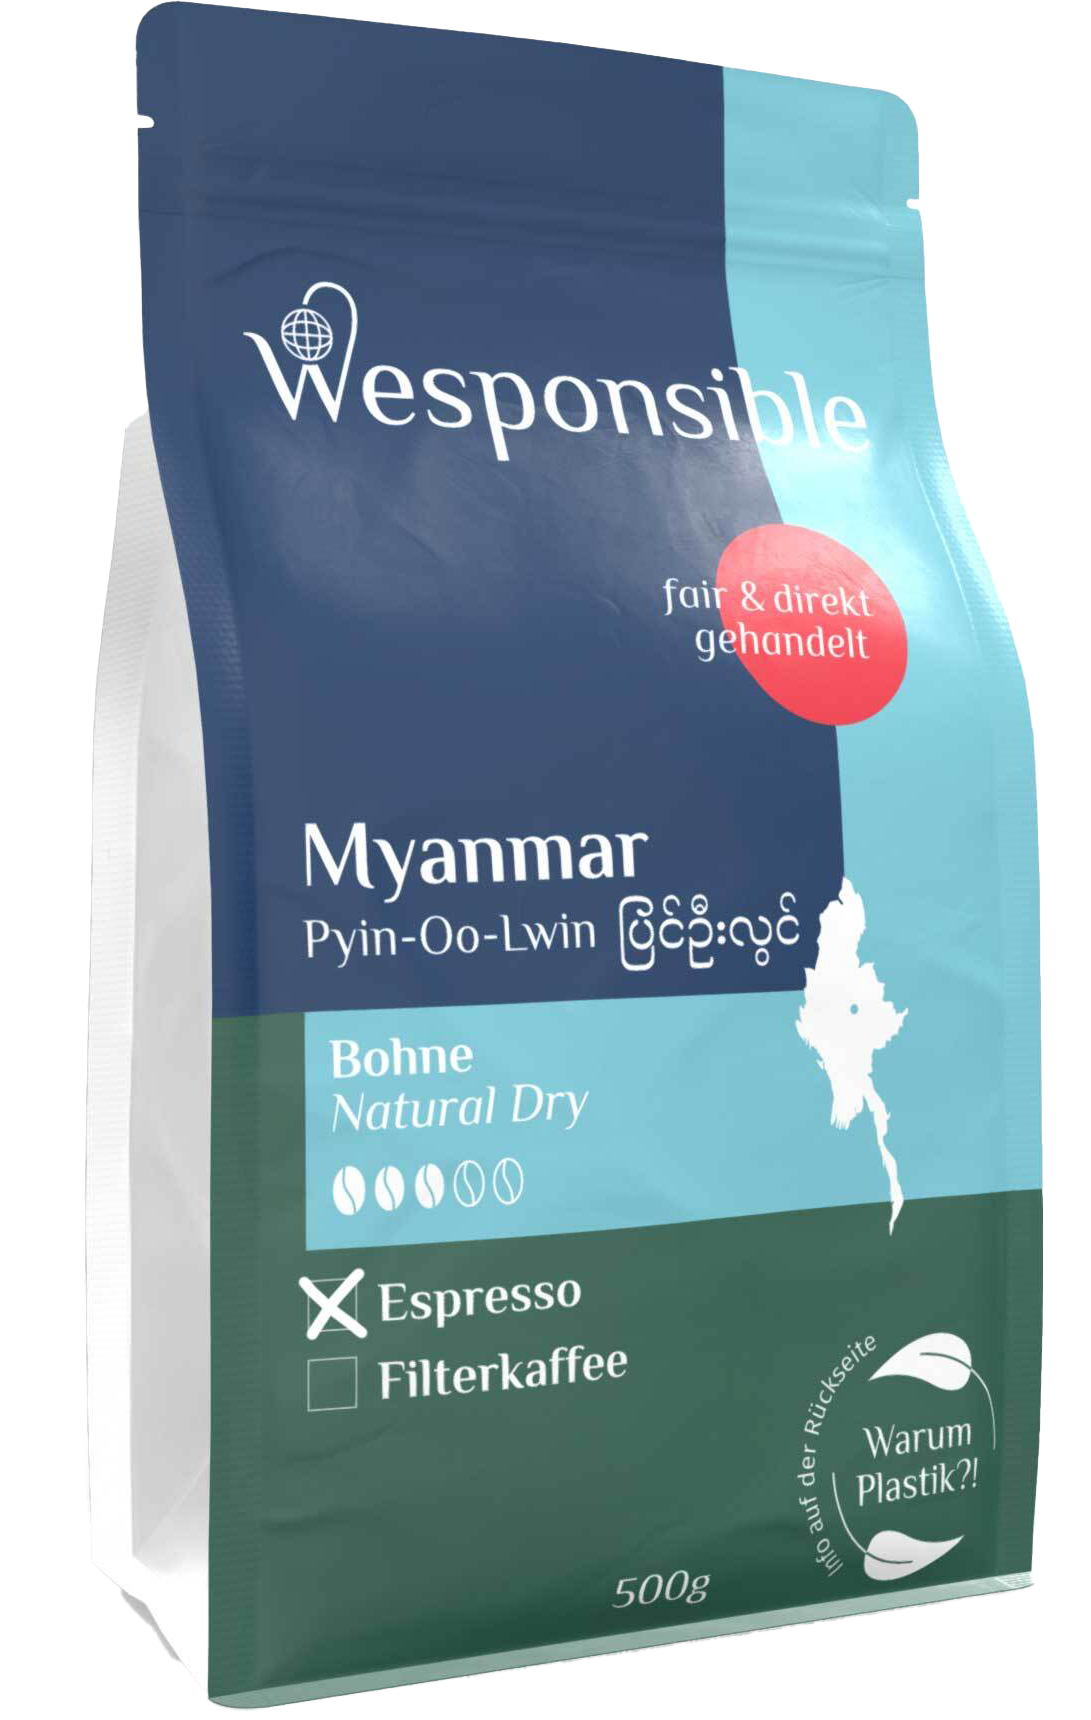 Gemeinwohl-Ökonomie Kaffee aus Myanmar